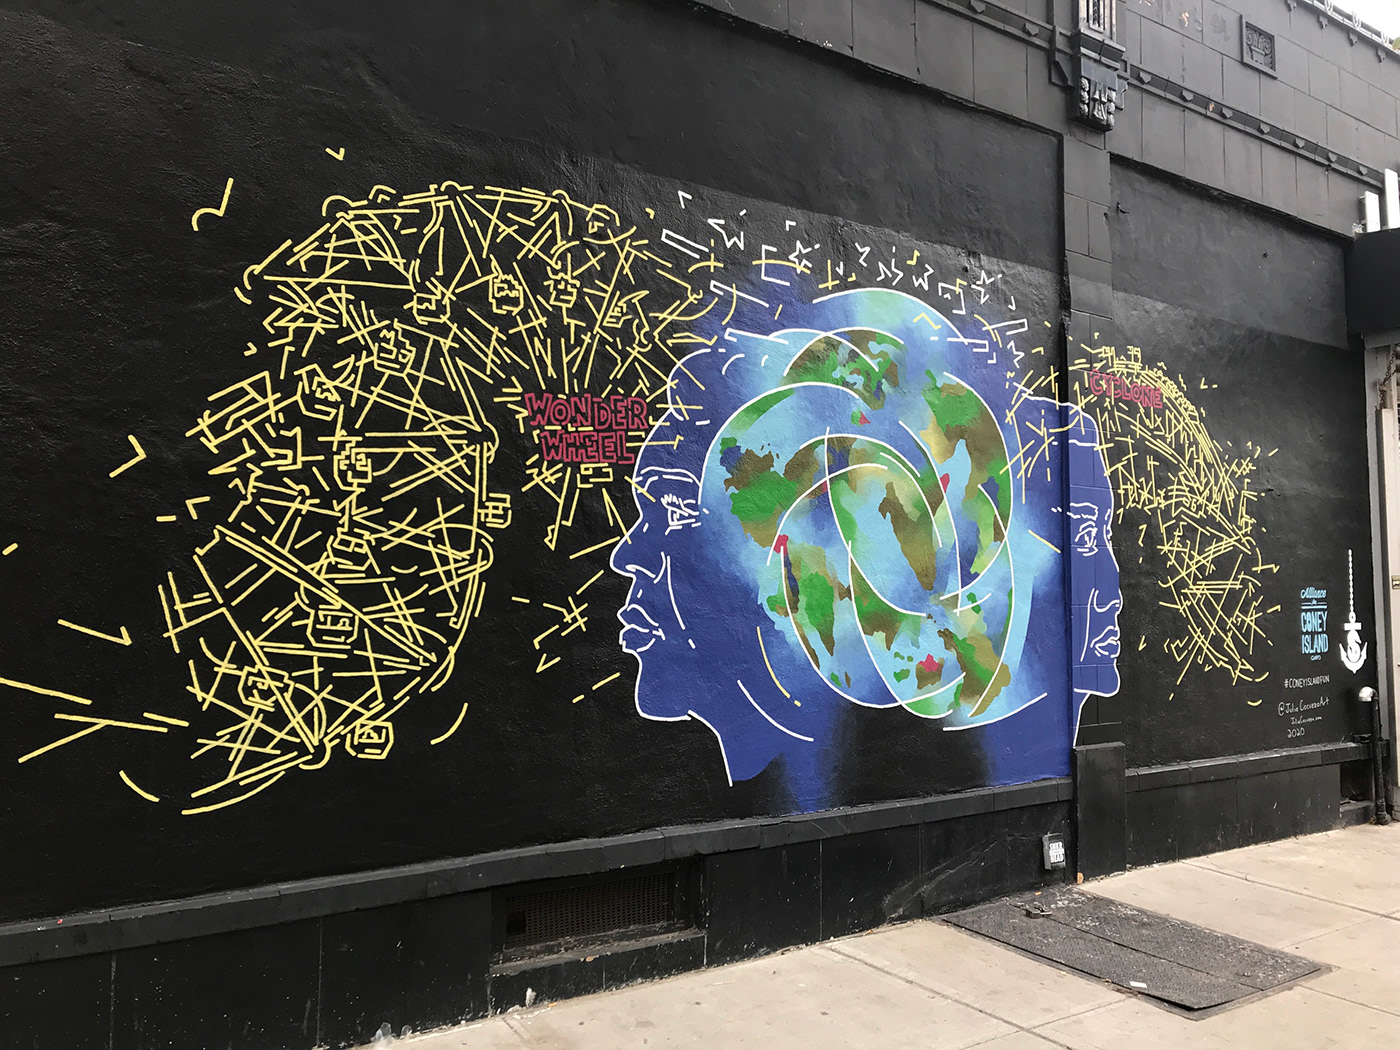 Brooklyn coney island cyclone keep spinning mural art public art Street Art  wonder wheel